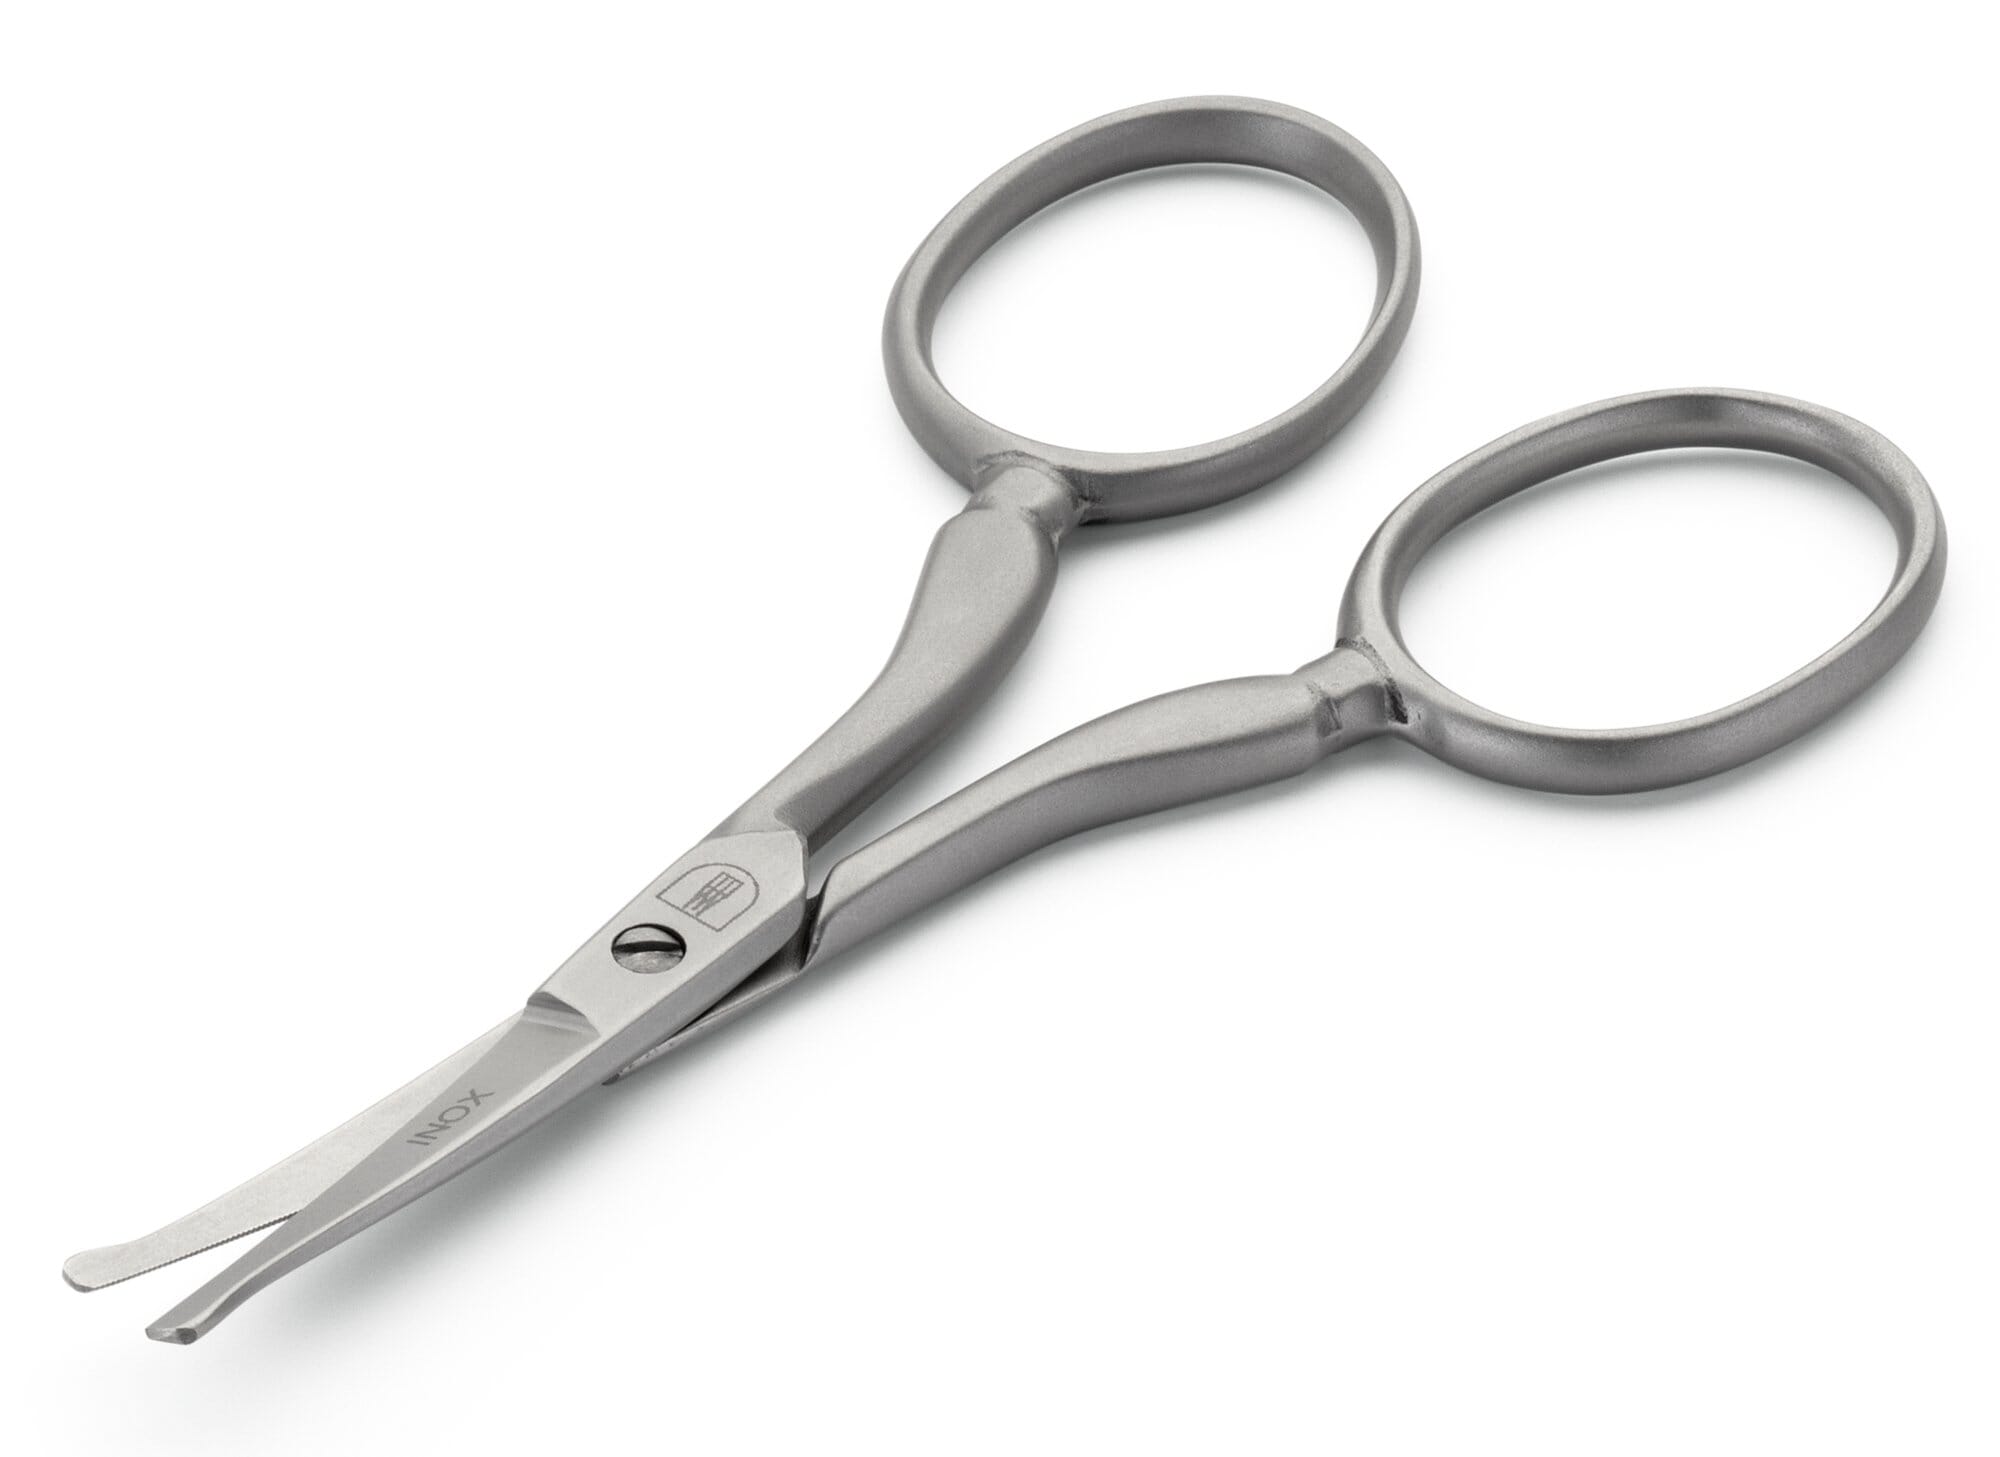 https://assets.manufactum.de/p/204/204902/204902_02.jpg/nose-ear-hair-scissors-stainless-steel.jpg